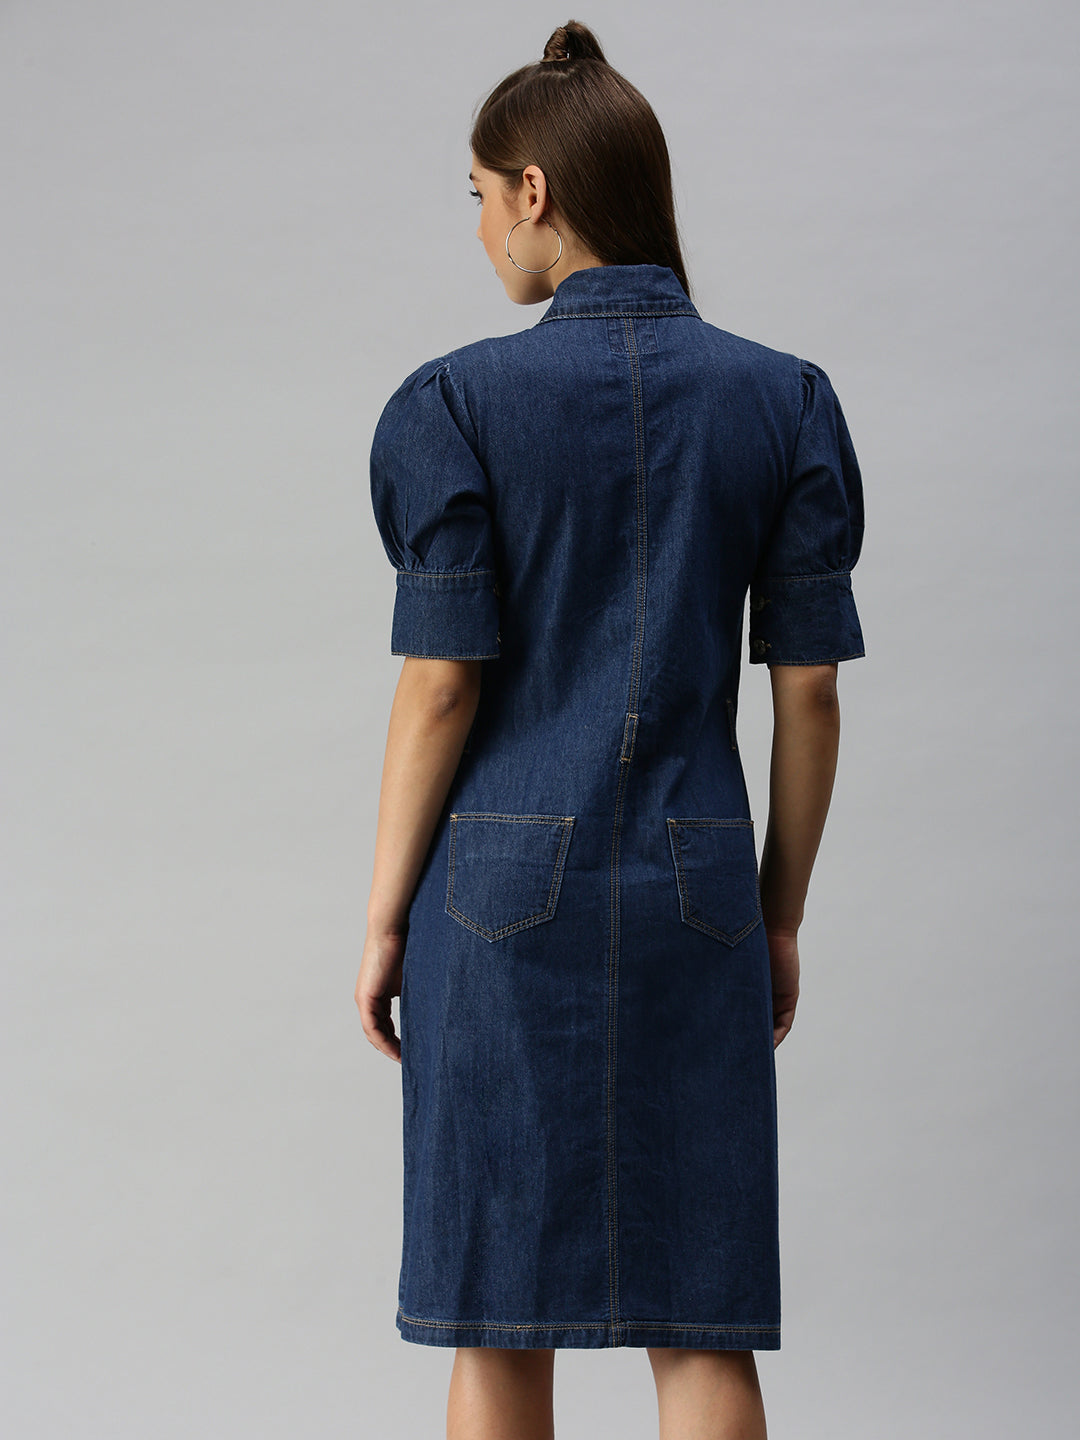 Women's Blue Solid A-Line Dress